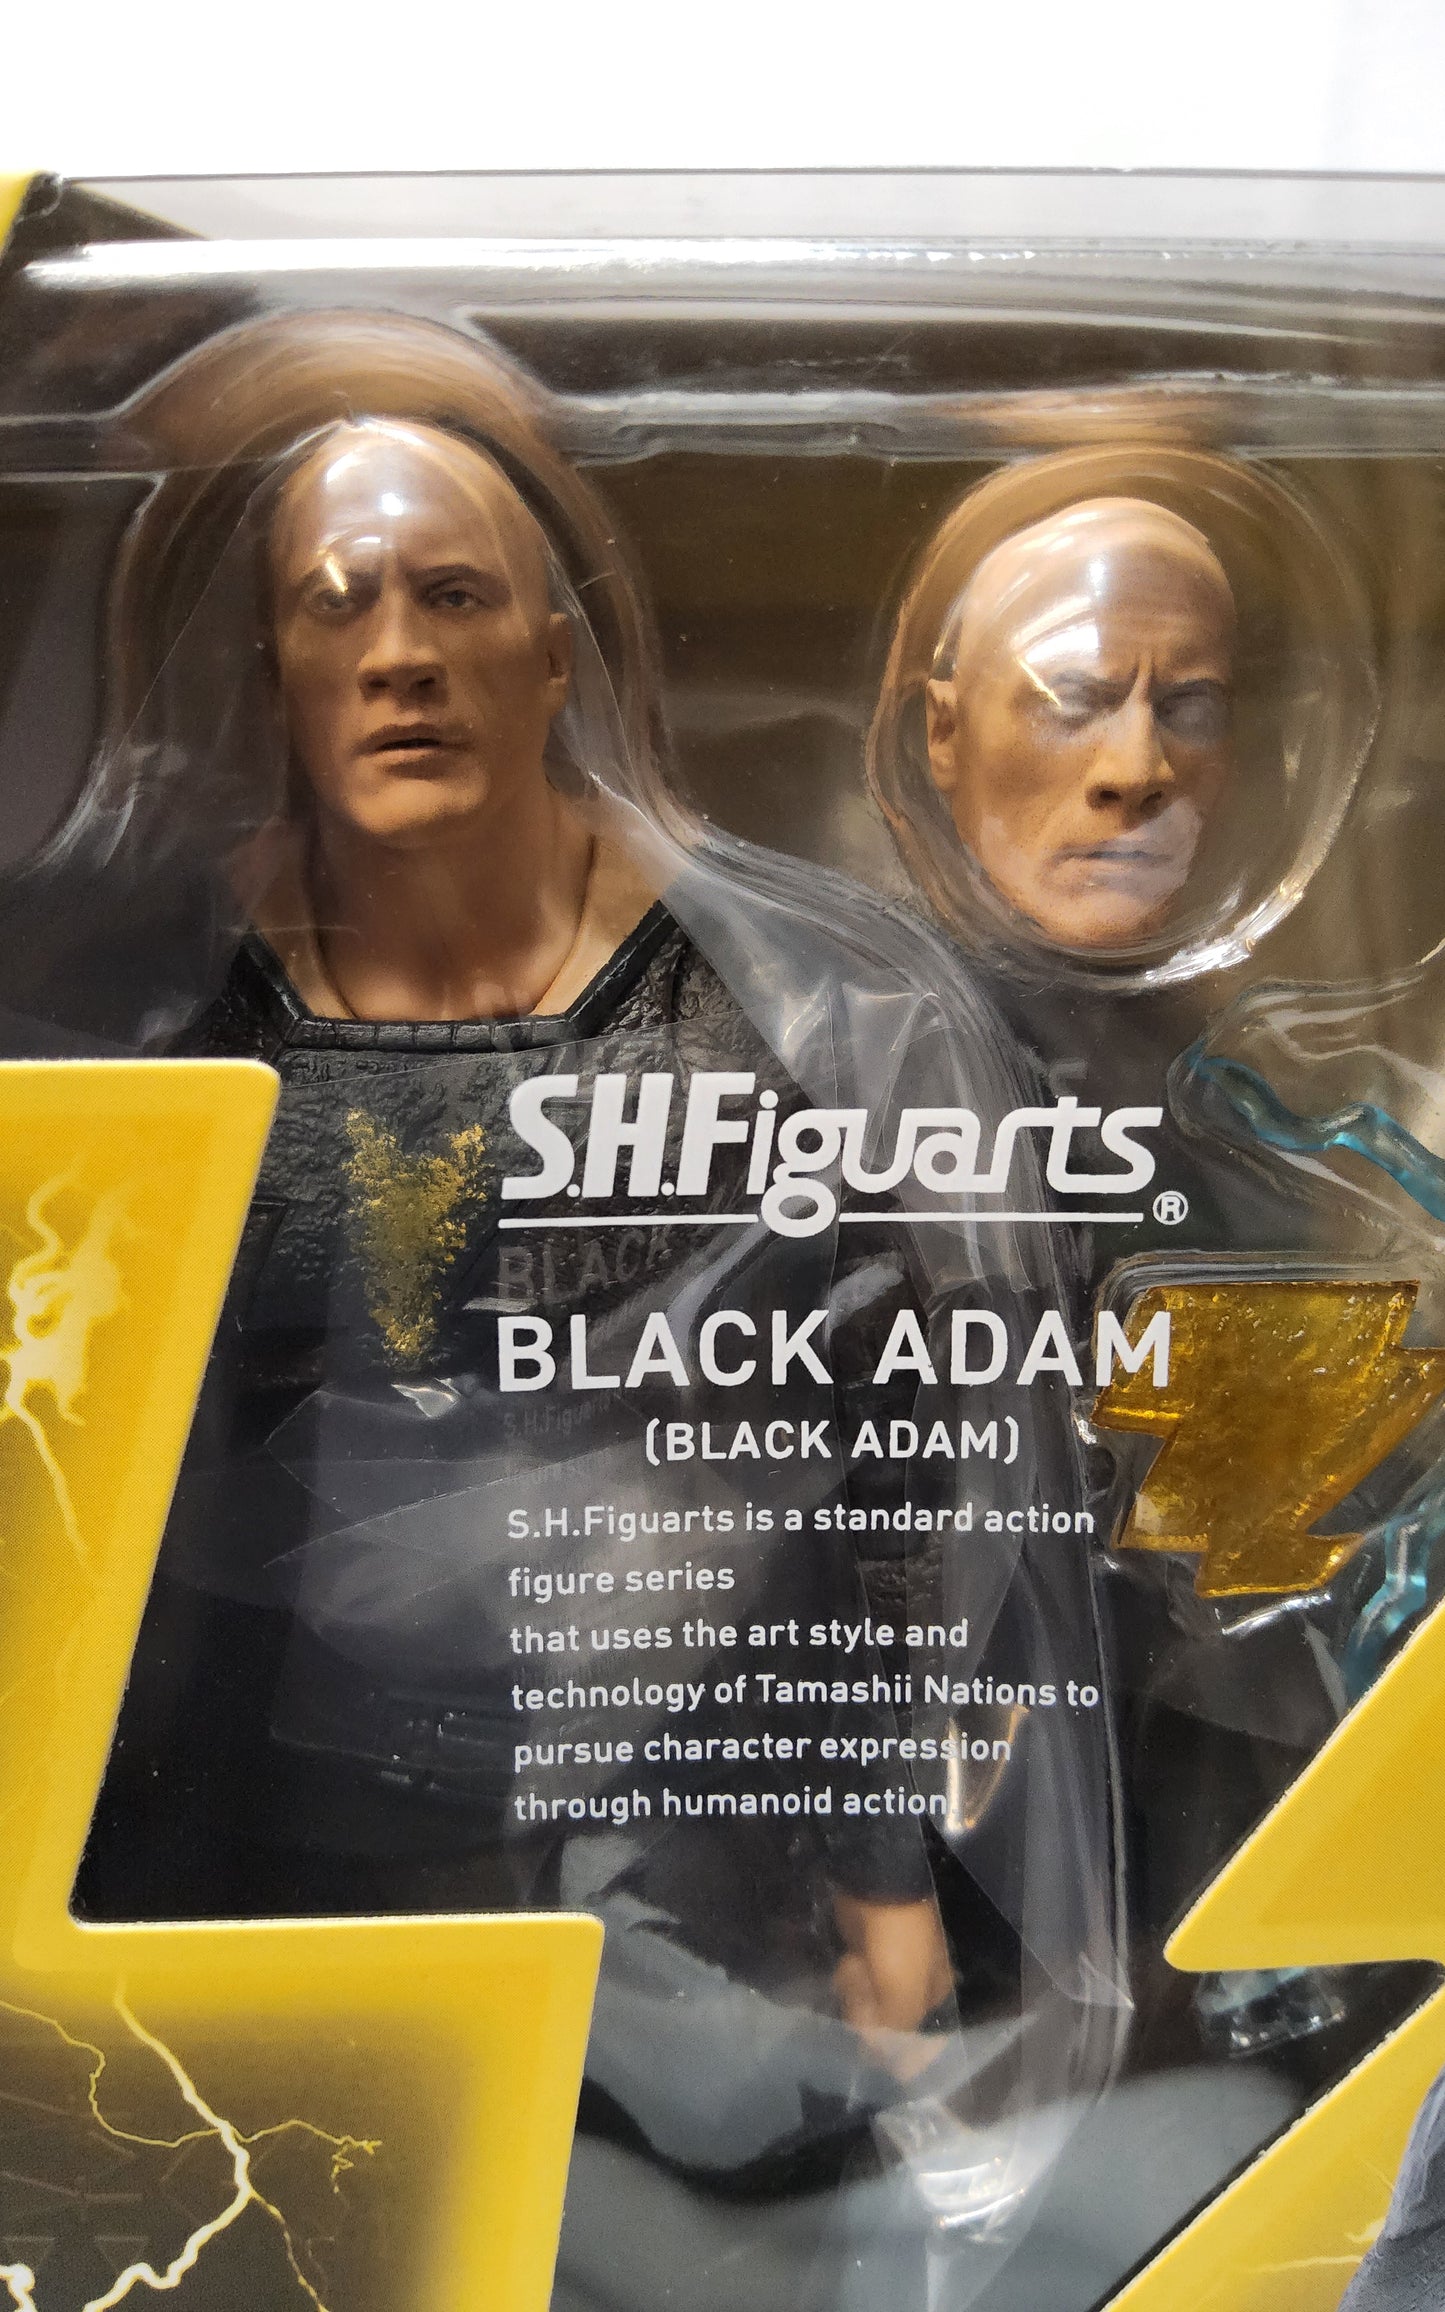 S.H.Figuarts Black Adam 6" Action Figure